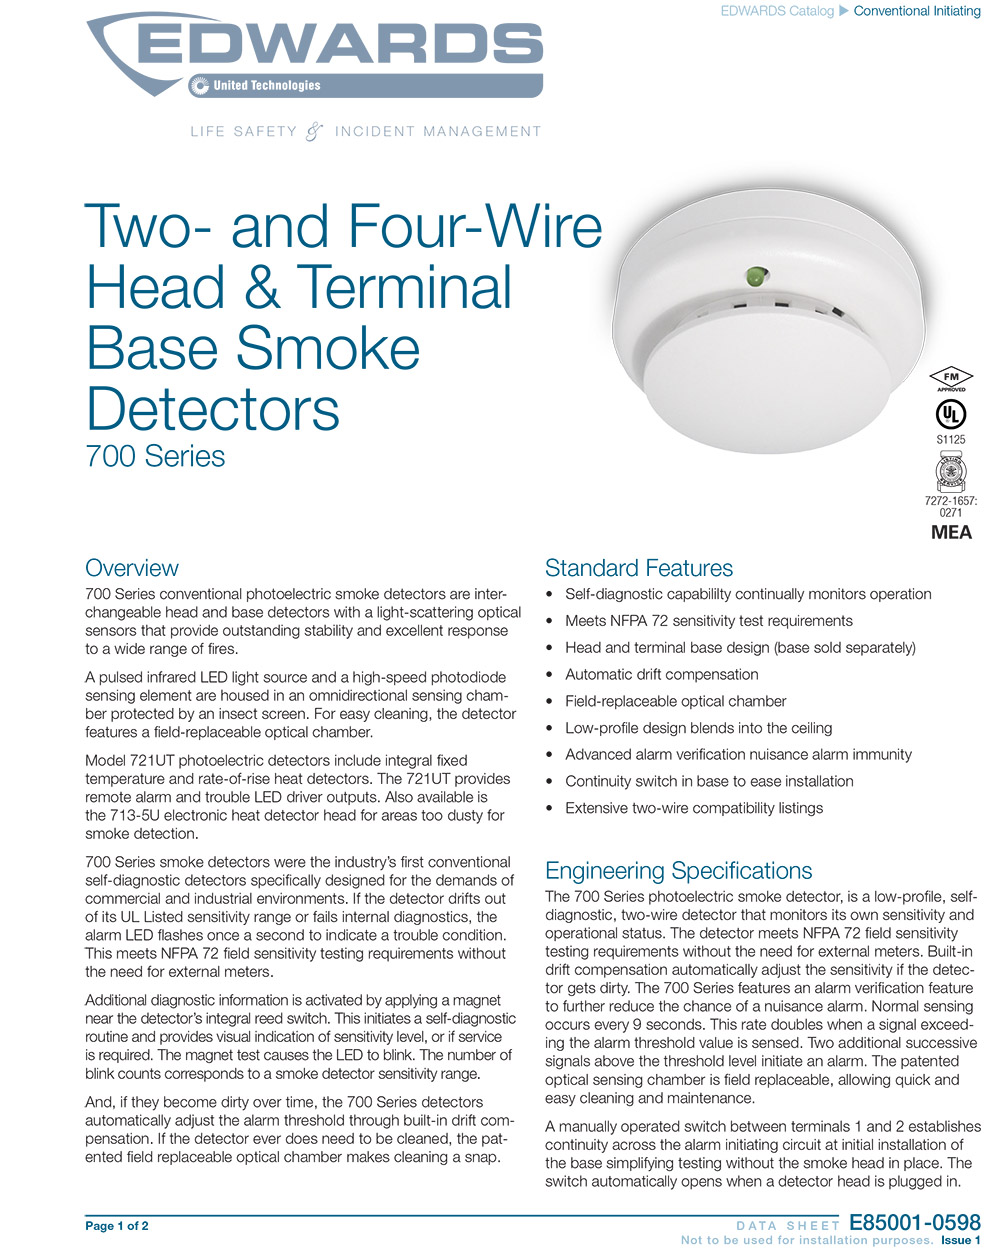 Head & Terminal Base Smoke Detectors